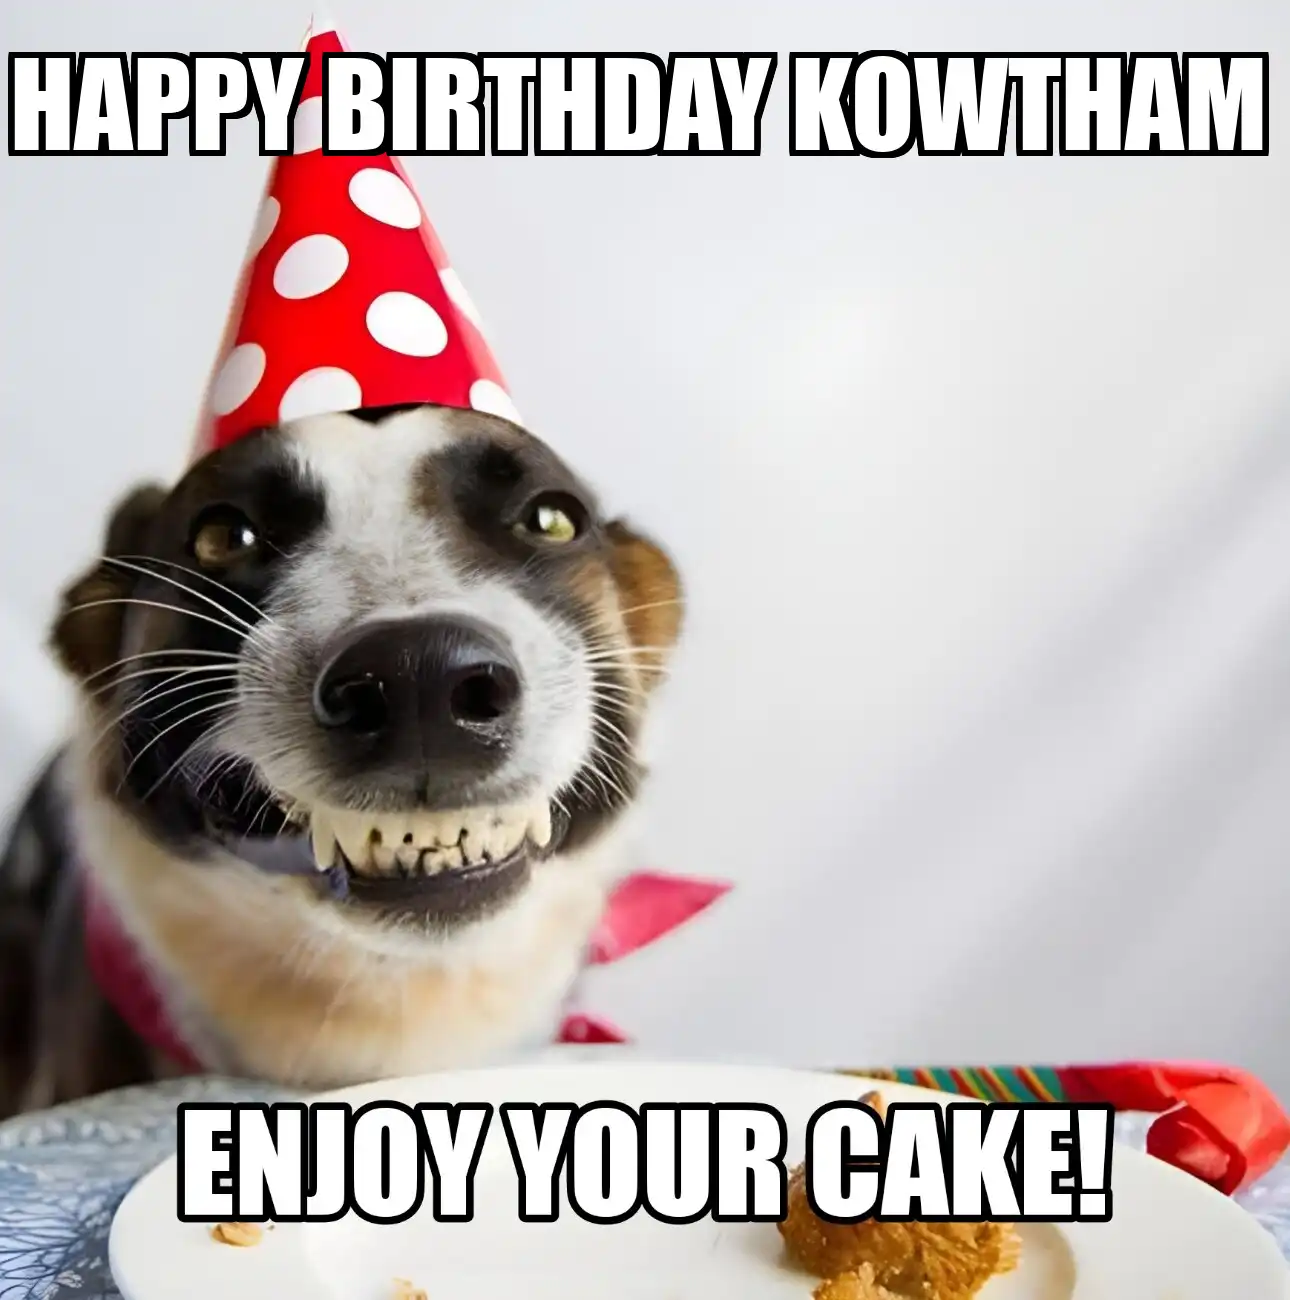 Happy Birthday Kowtham Enjoy Your Cake Dog Meme